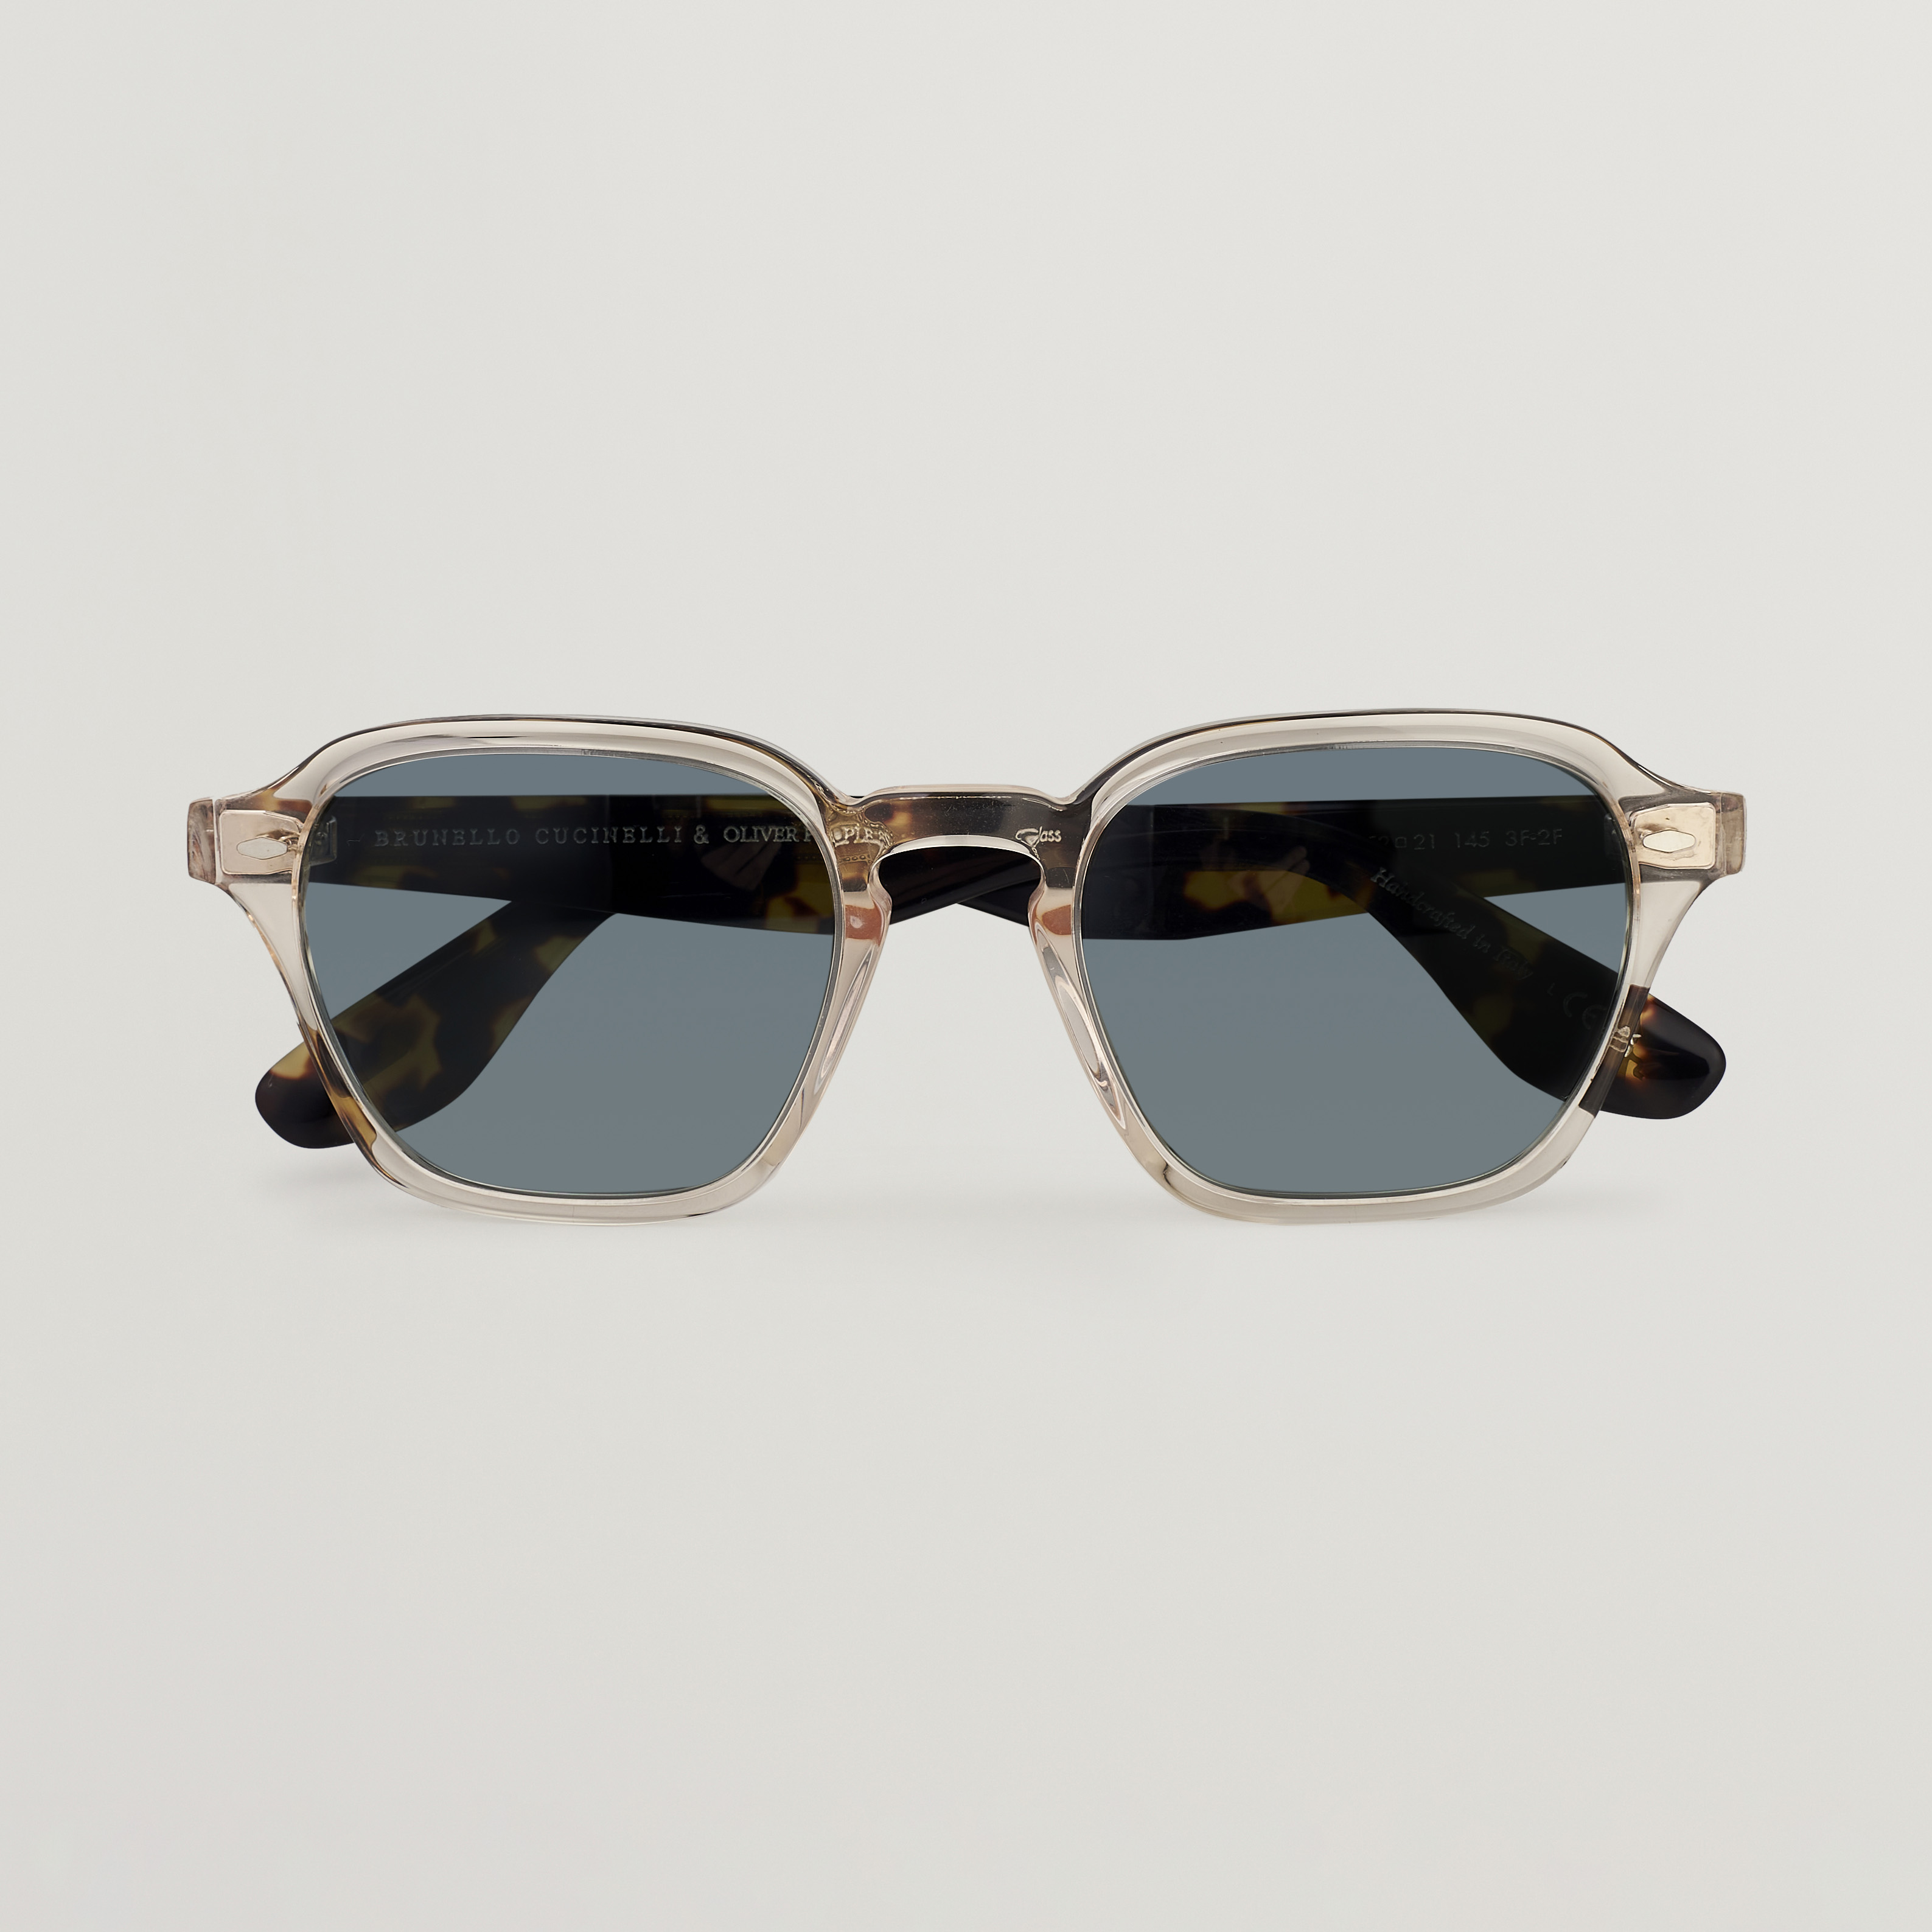 Narabar Scan Mindful Oliver Peoples Griffo Photochromic Sunglasses Bicolour Tortoise - CareOfCar